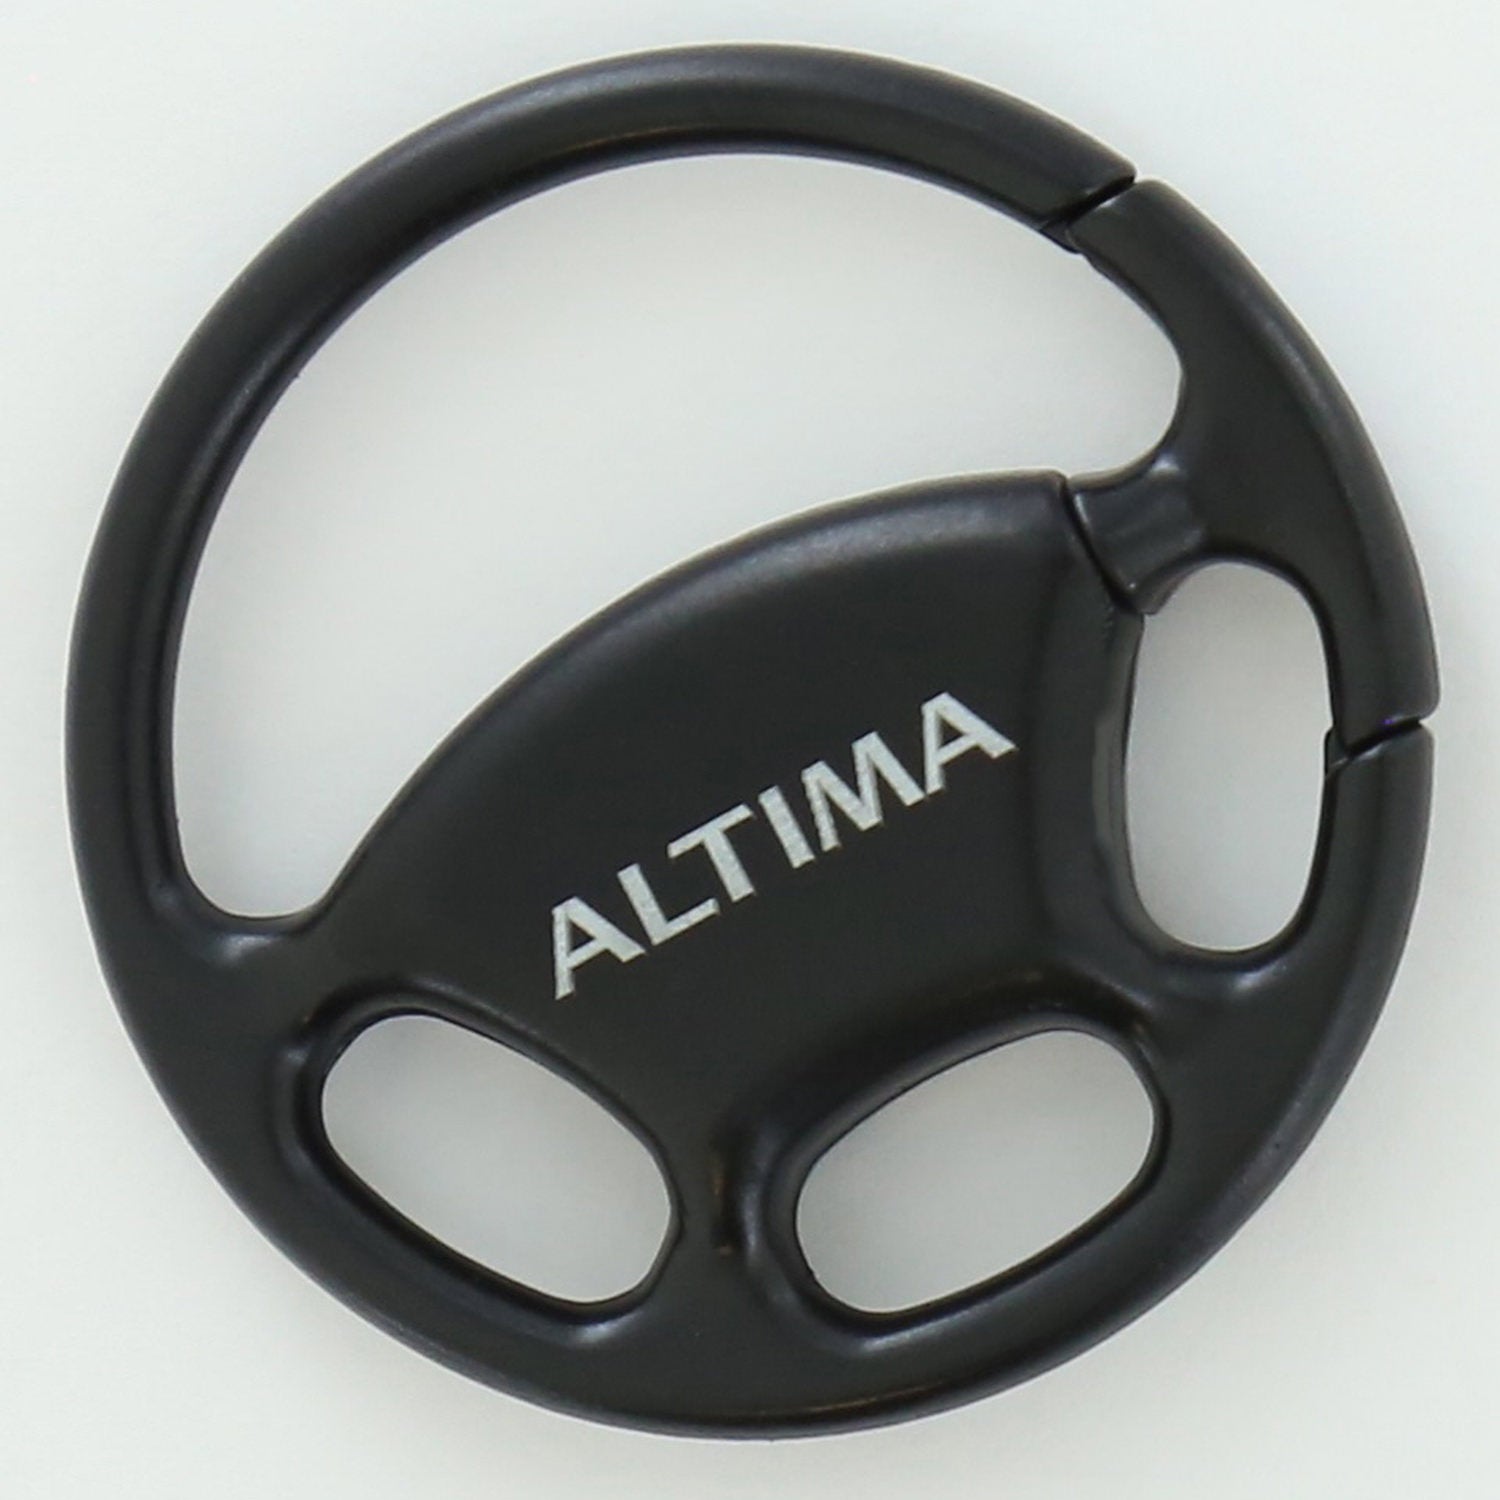 Nissan Altima Key Chain